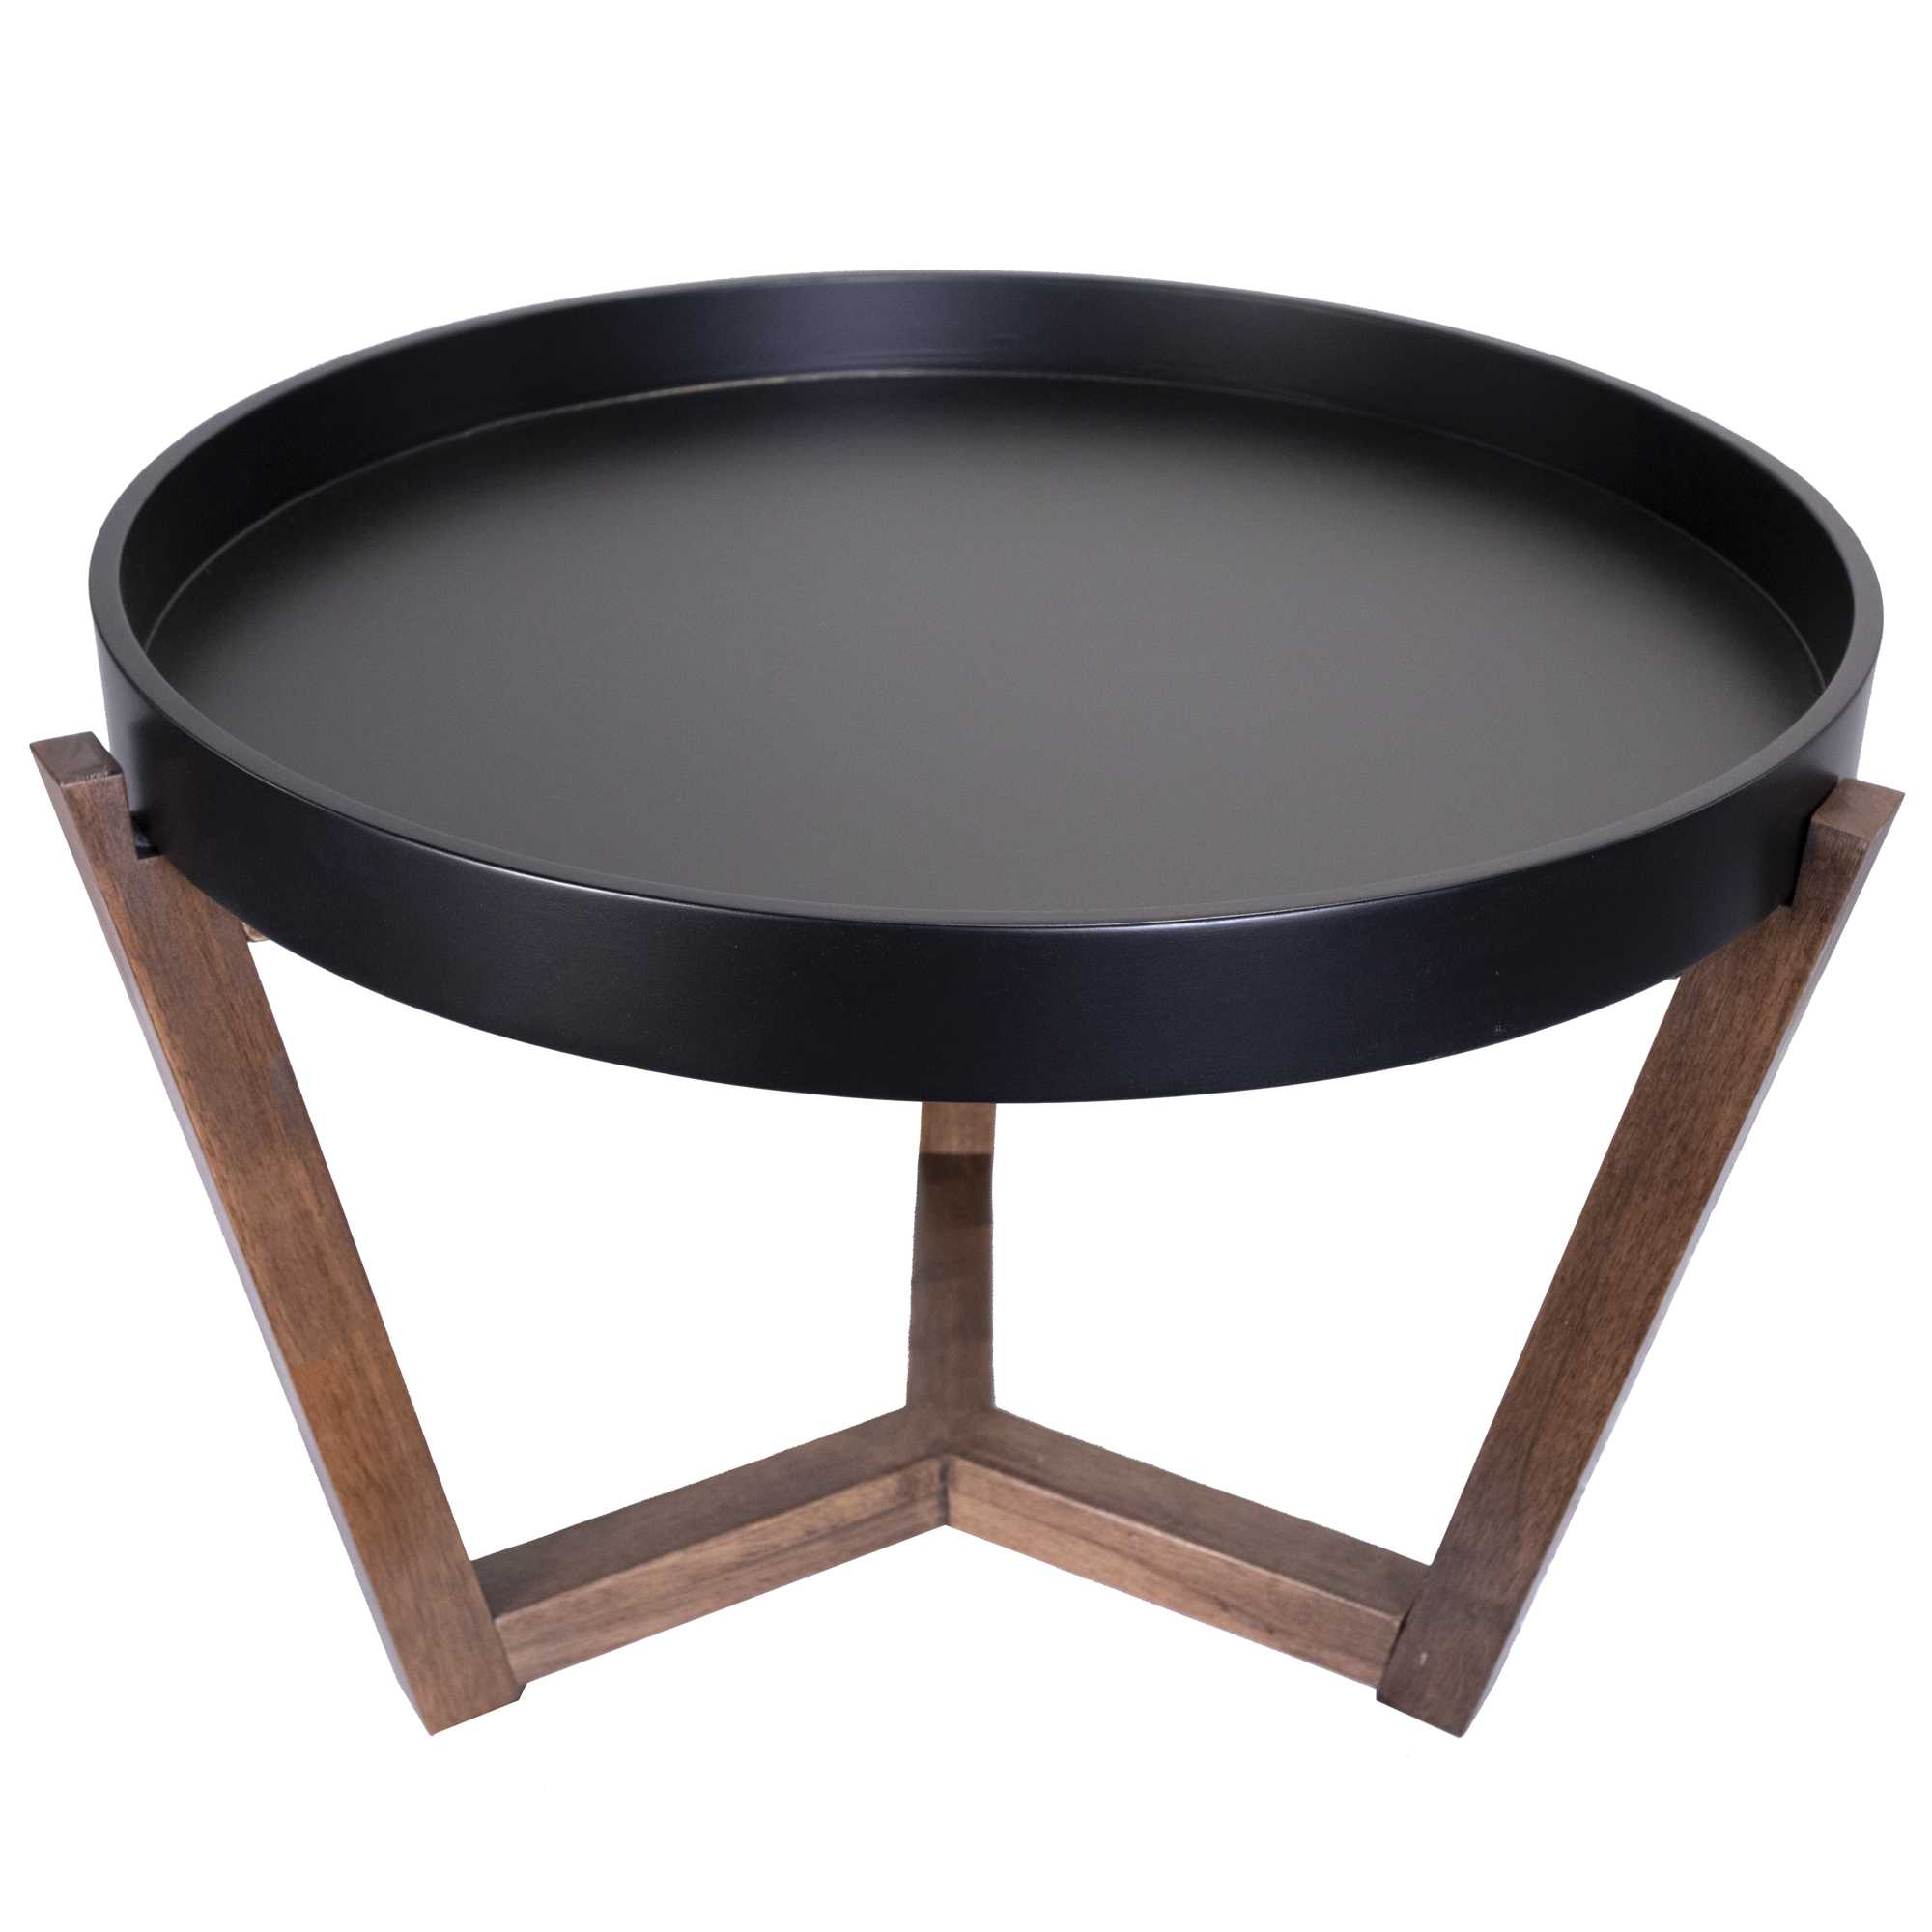 22" X 22" X 16" Black & Mocha Solid Wood Round Table